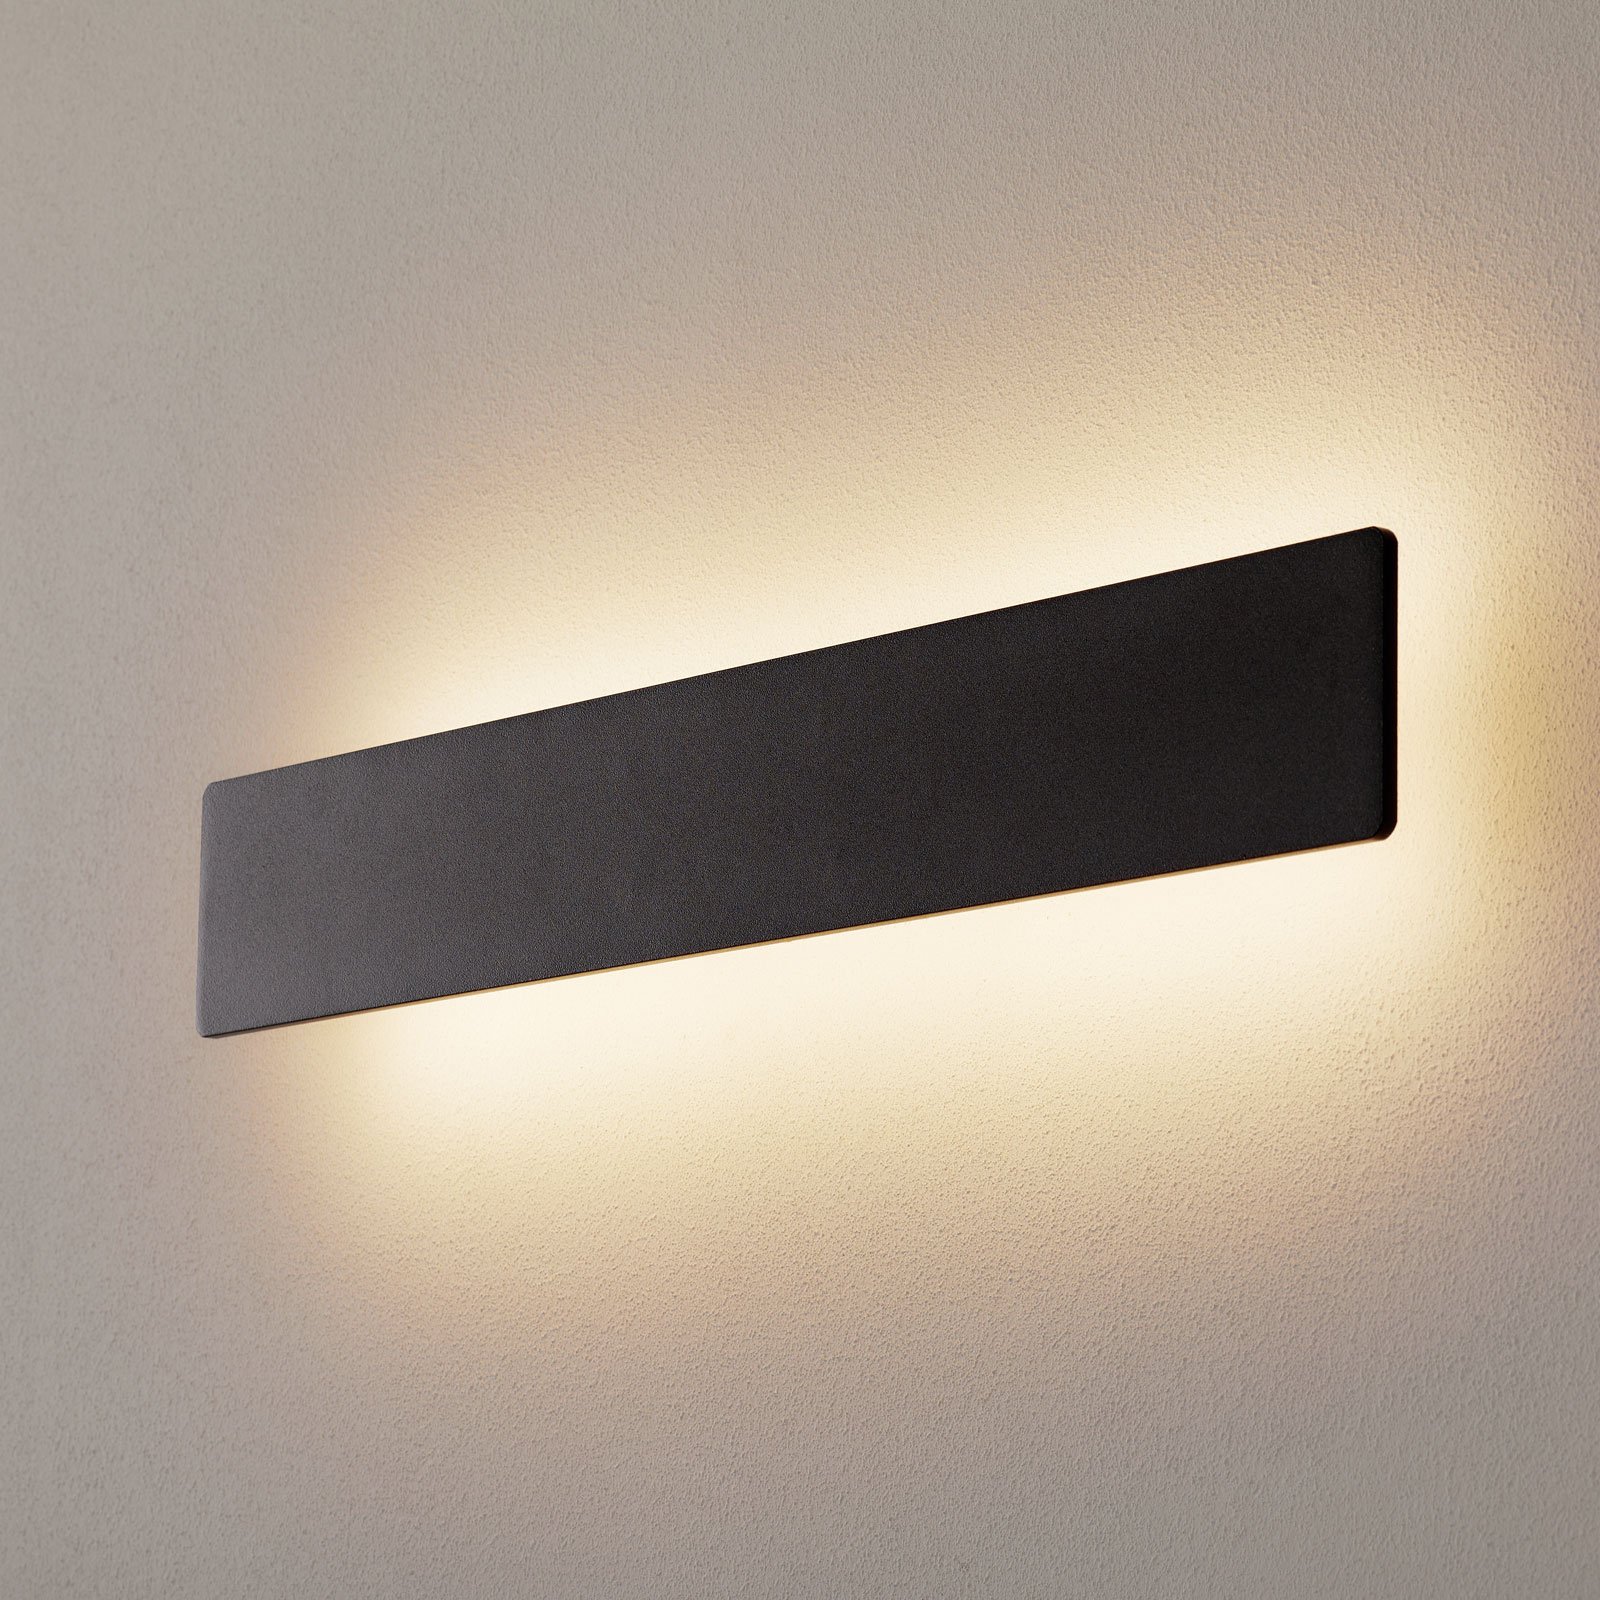 LED-vägglampa Zig Zag svart, bredd 53 cm